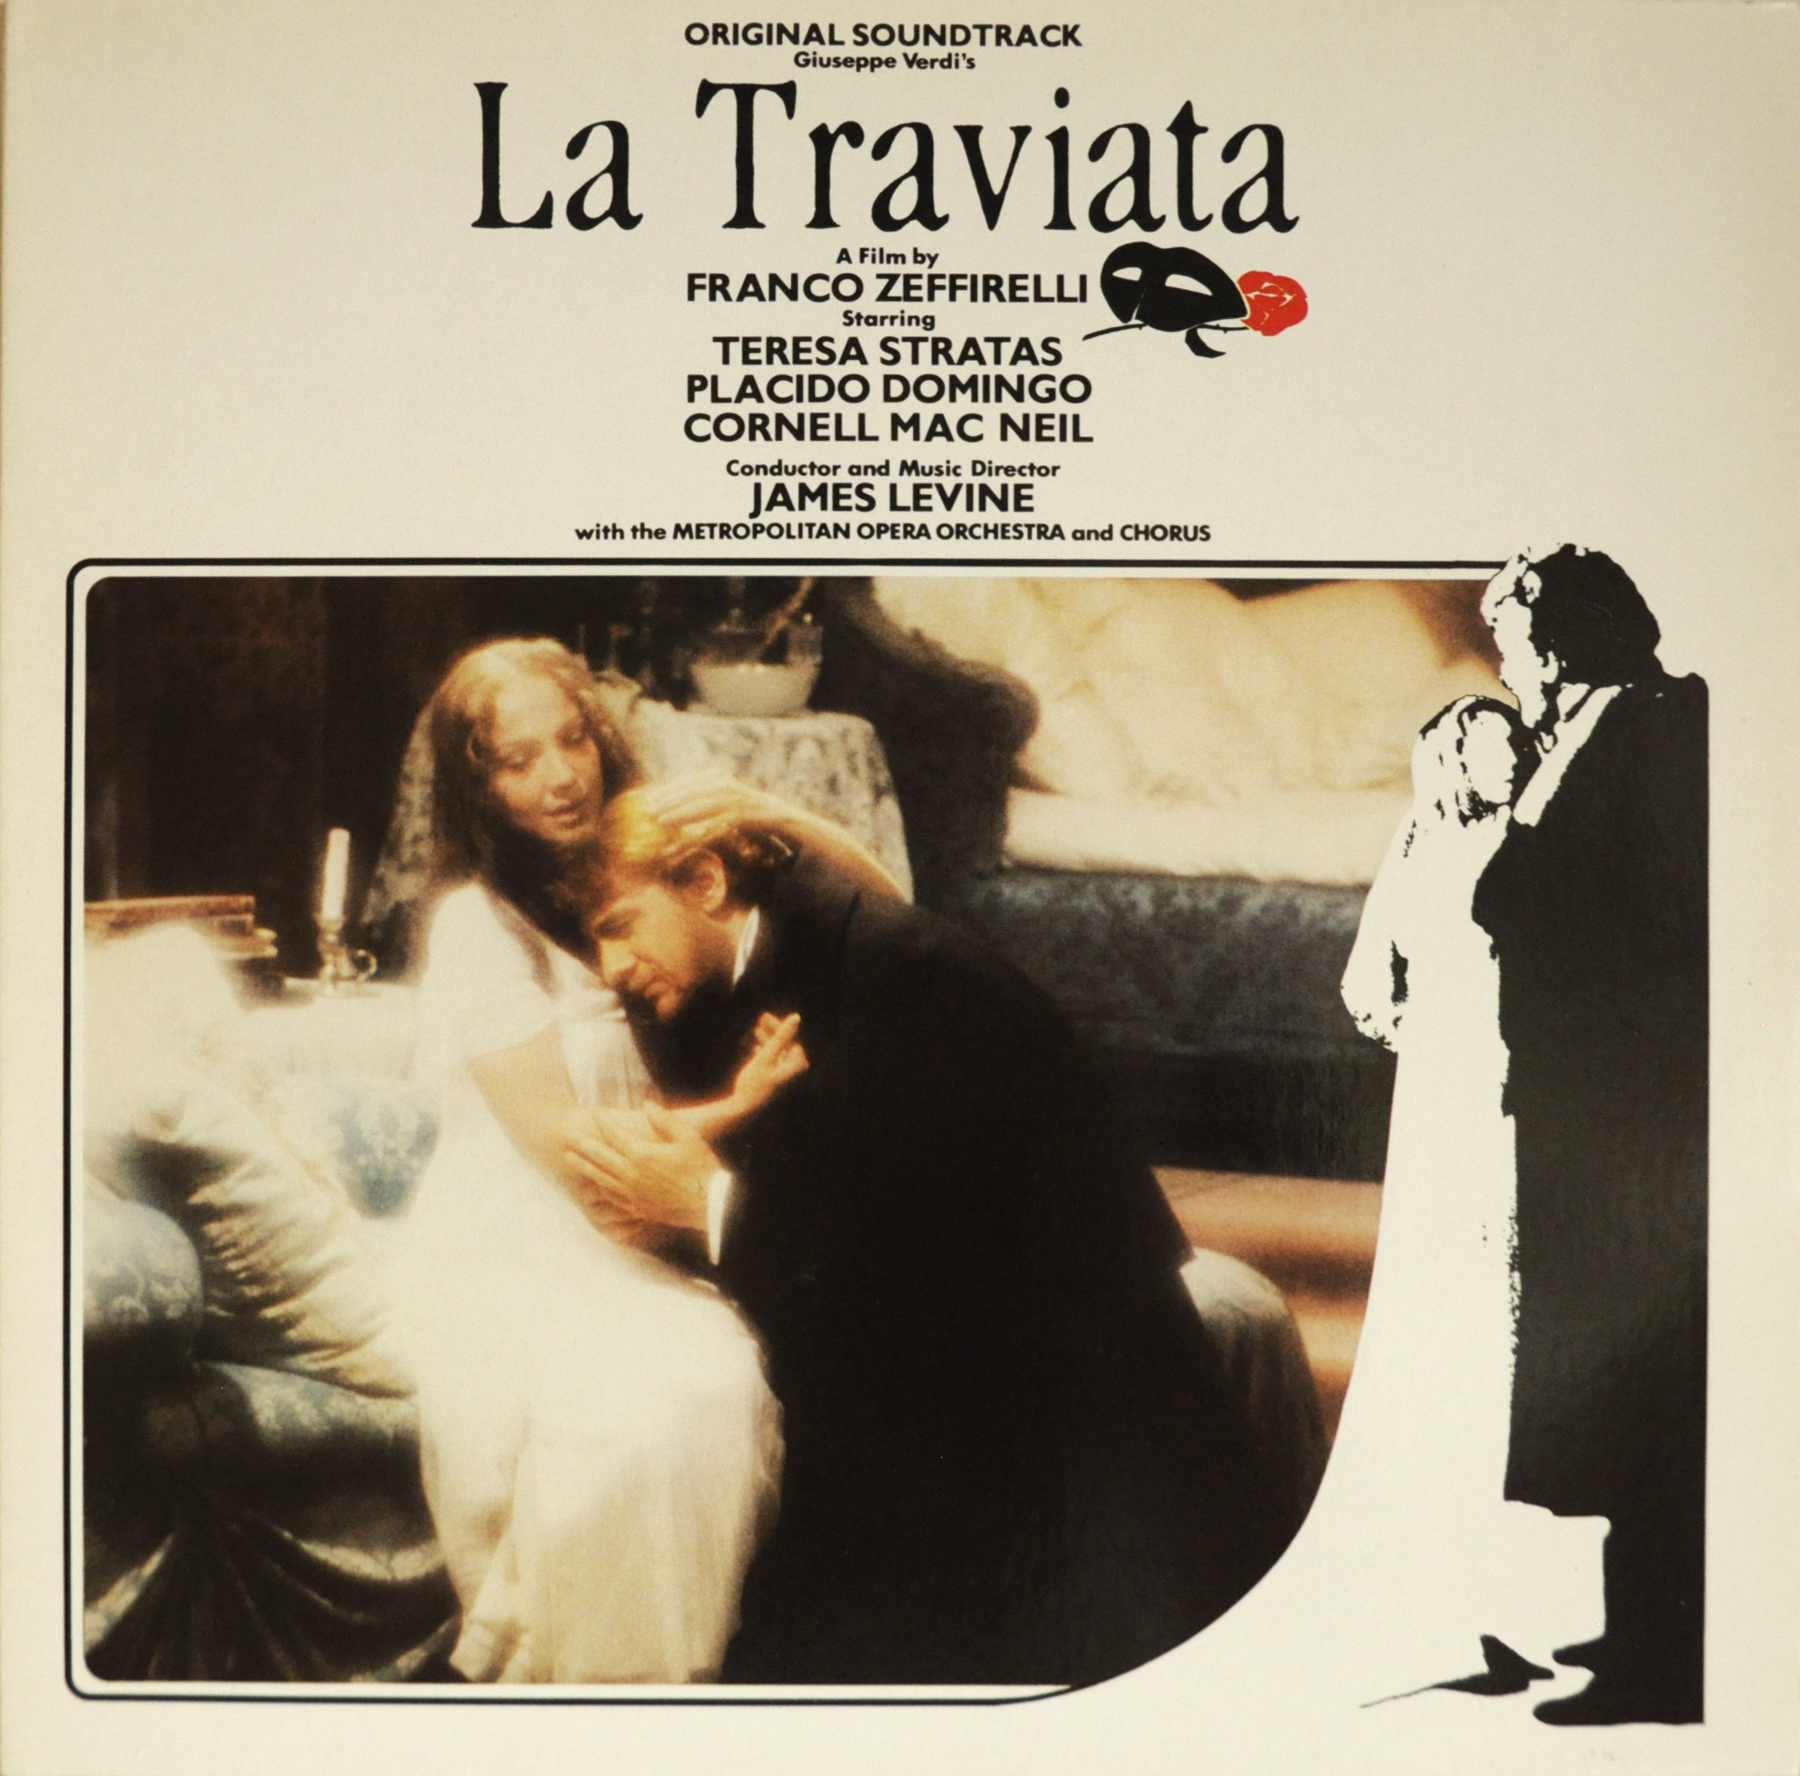 Acheter disque vinyle VERDI Giuseppe  - James Levine La Traviata a vendre